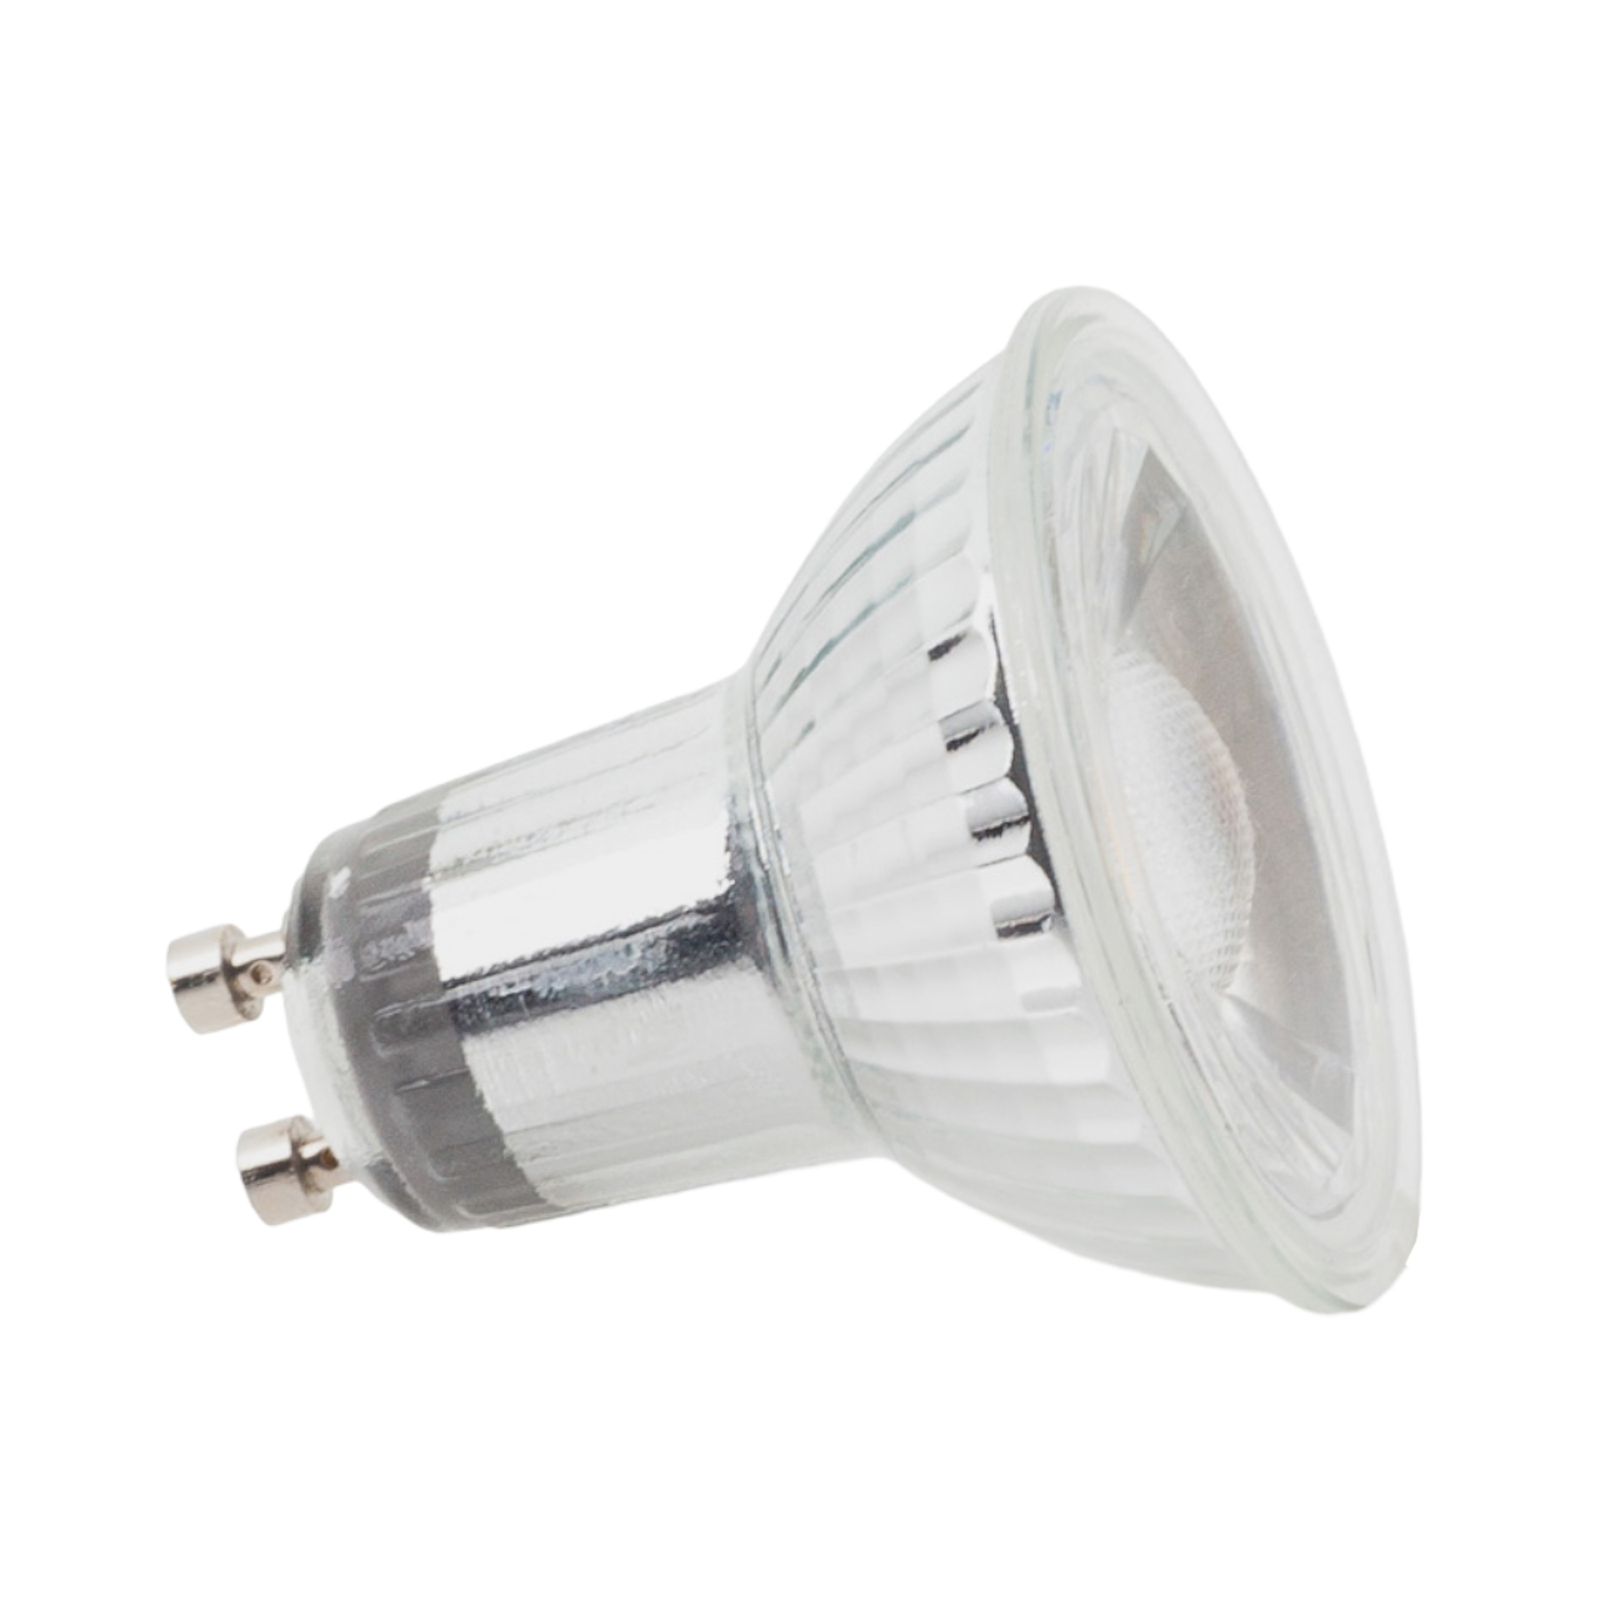 GU10 5 W 830 reflector LED bulb, dimmable